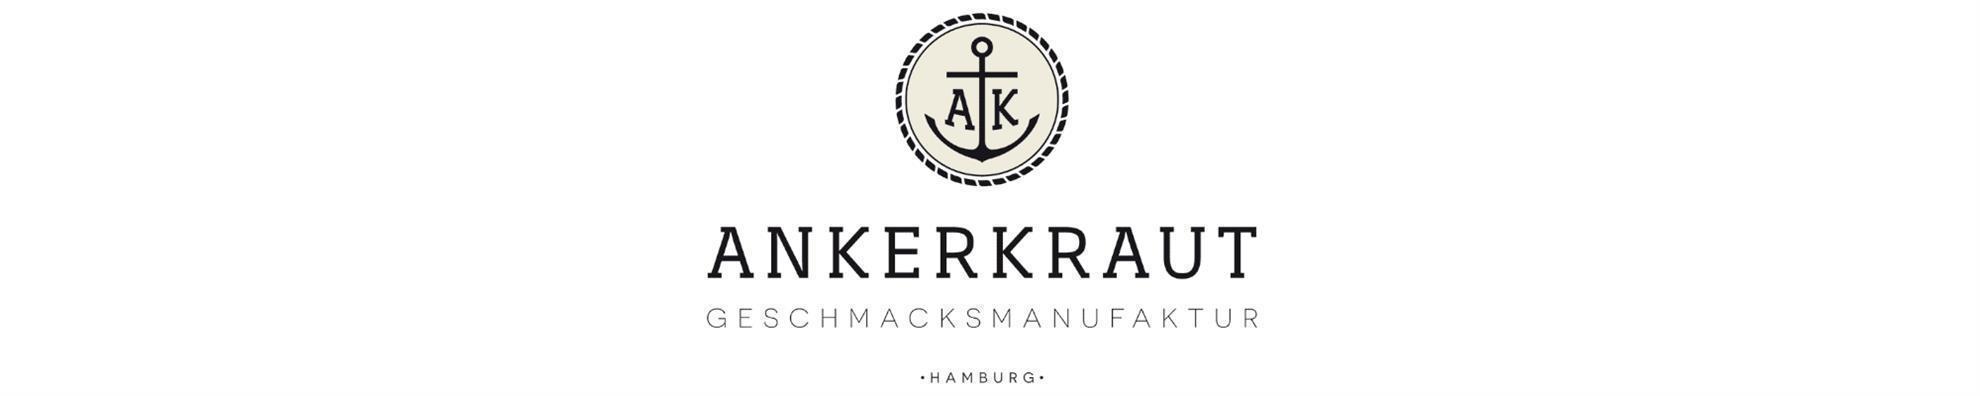 Ankerkraut - Hans Wurst